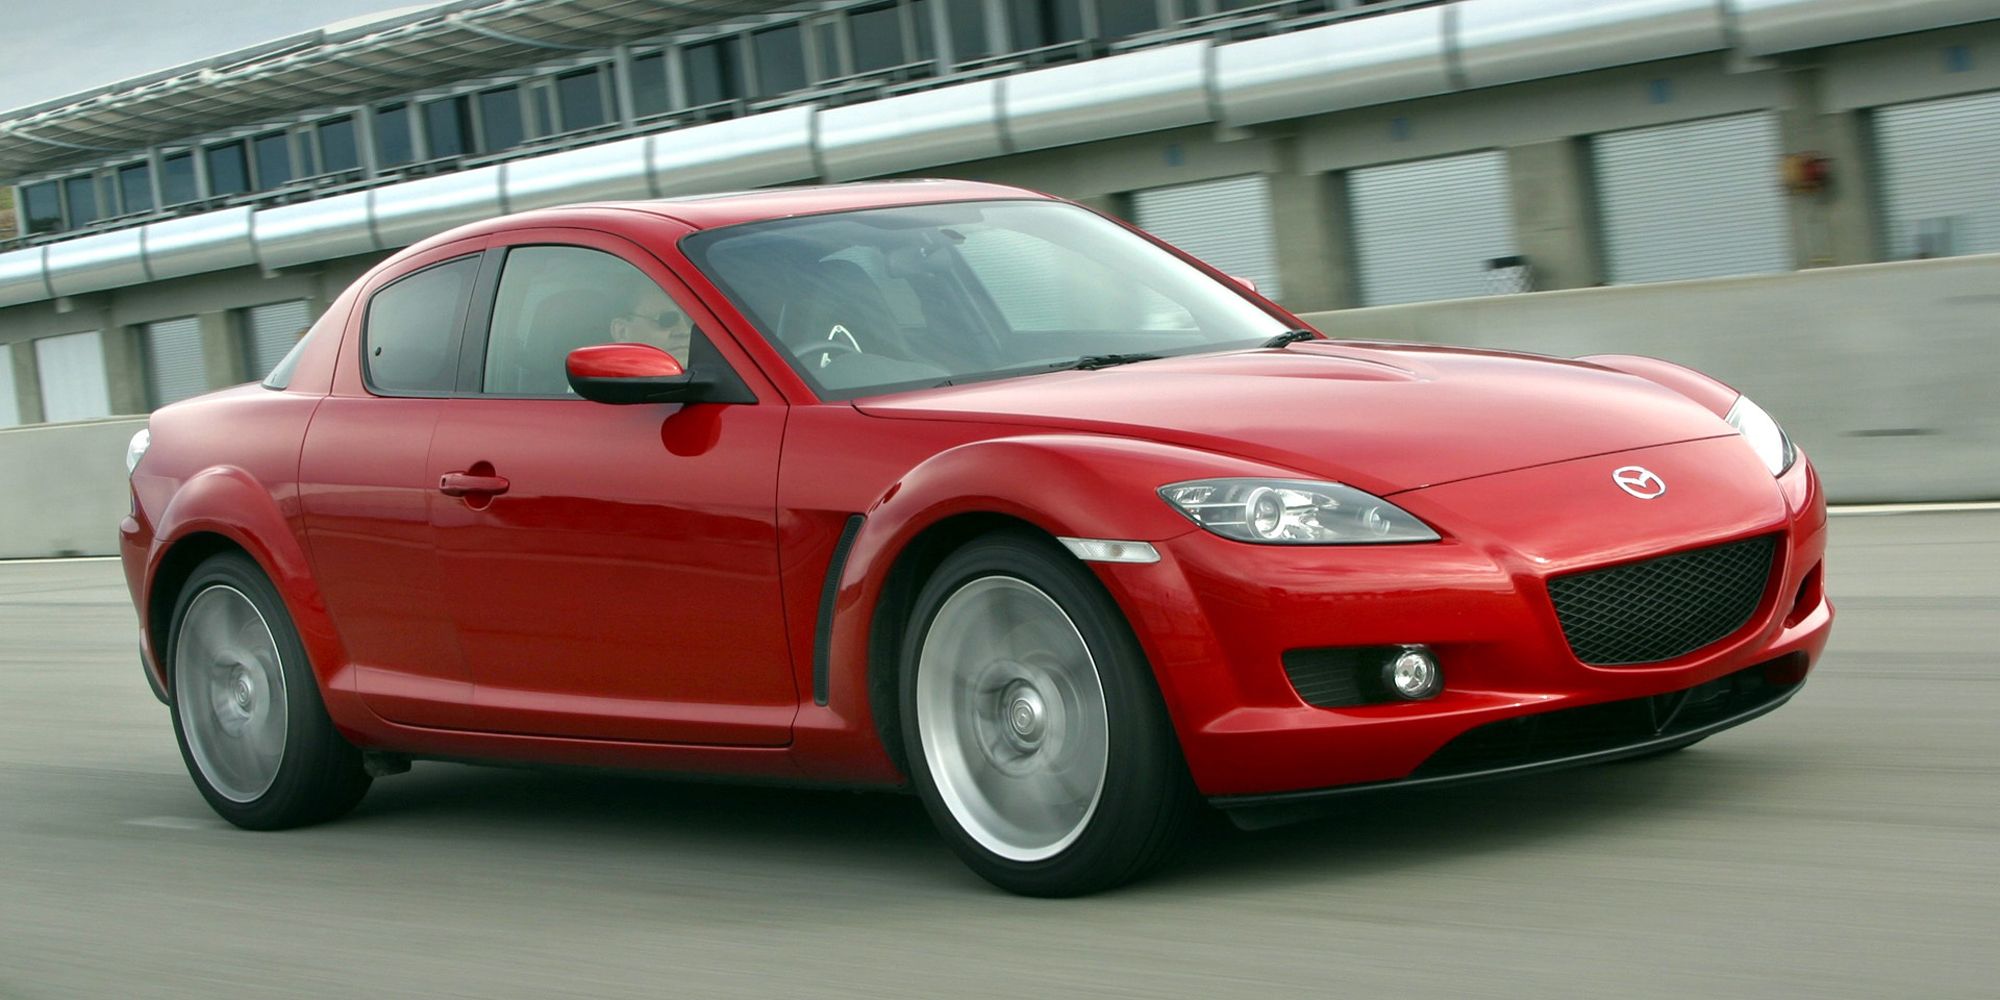 The original Mazda RX-8 in red